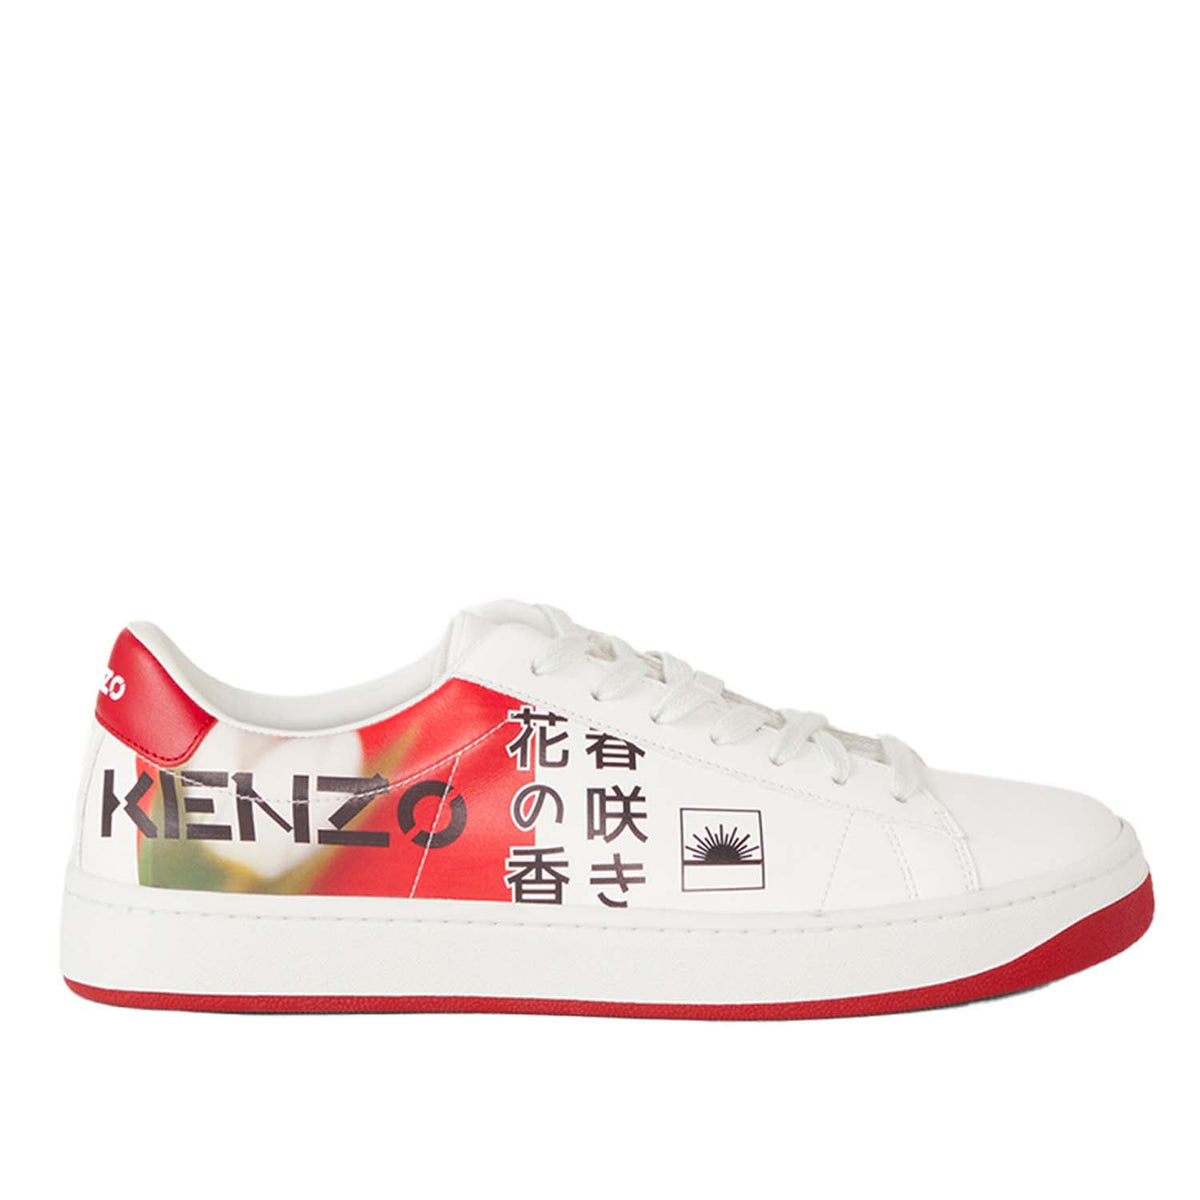 Kenzo Men's Kourt K Logo 'Floral' Sneakers